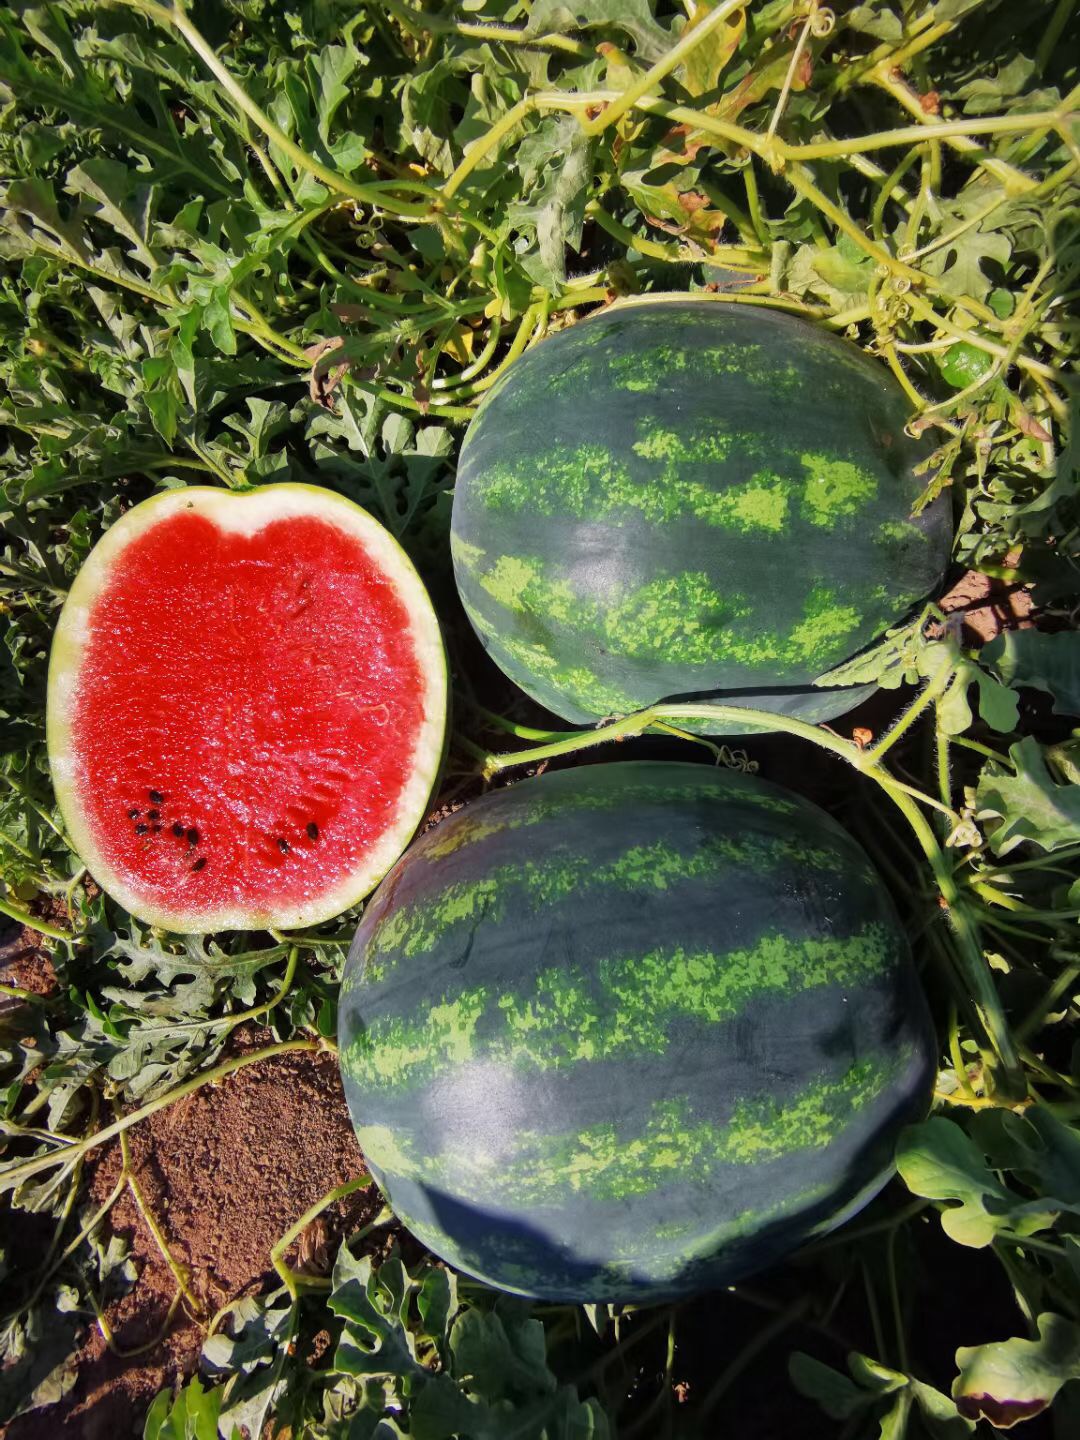 Suntoday crimson sweet 8-15kgs watermelon seeds(11032)